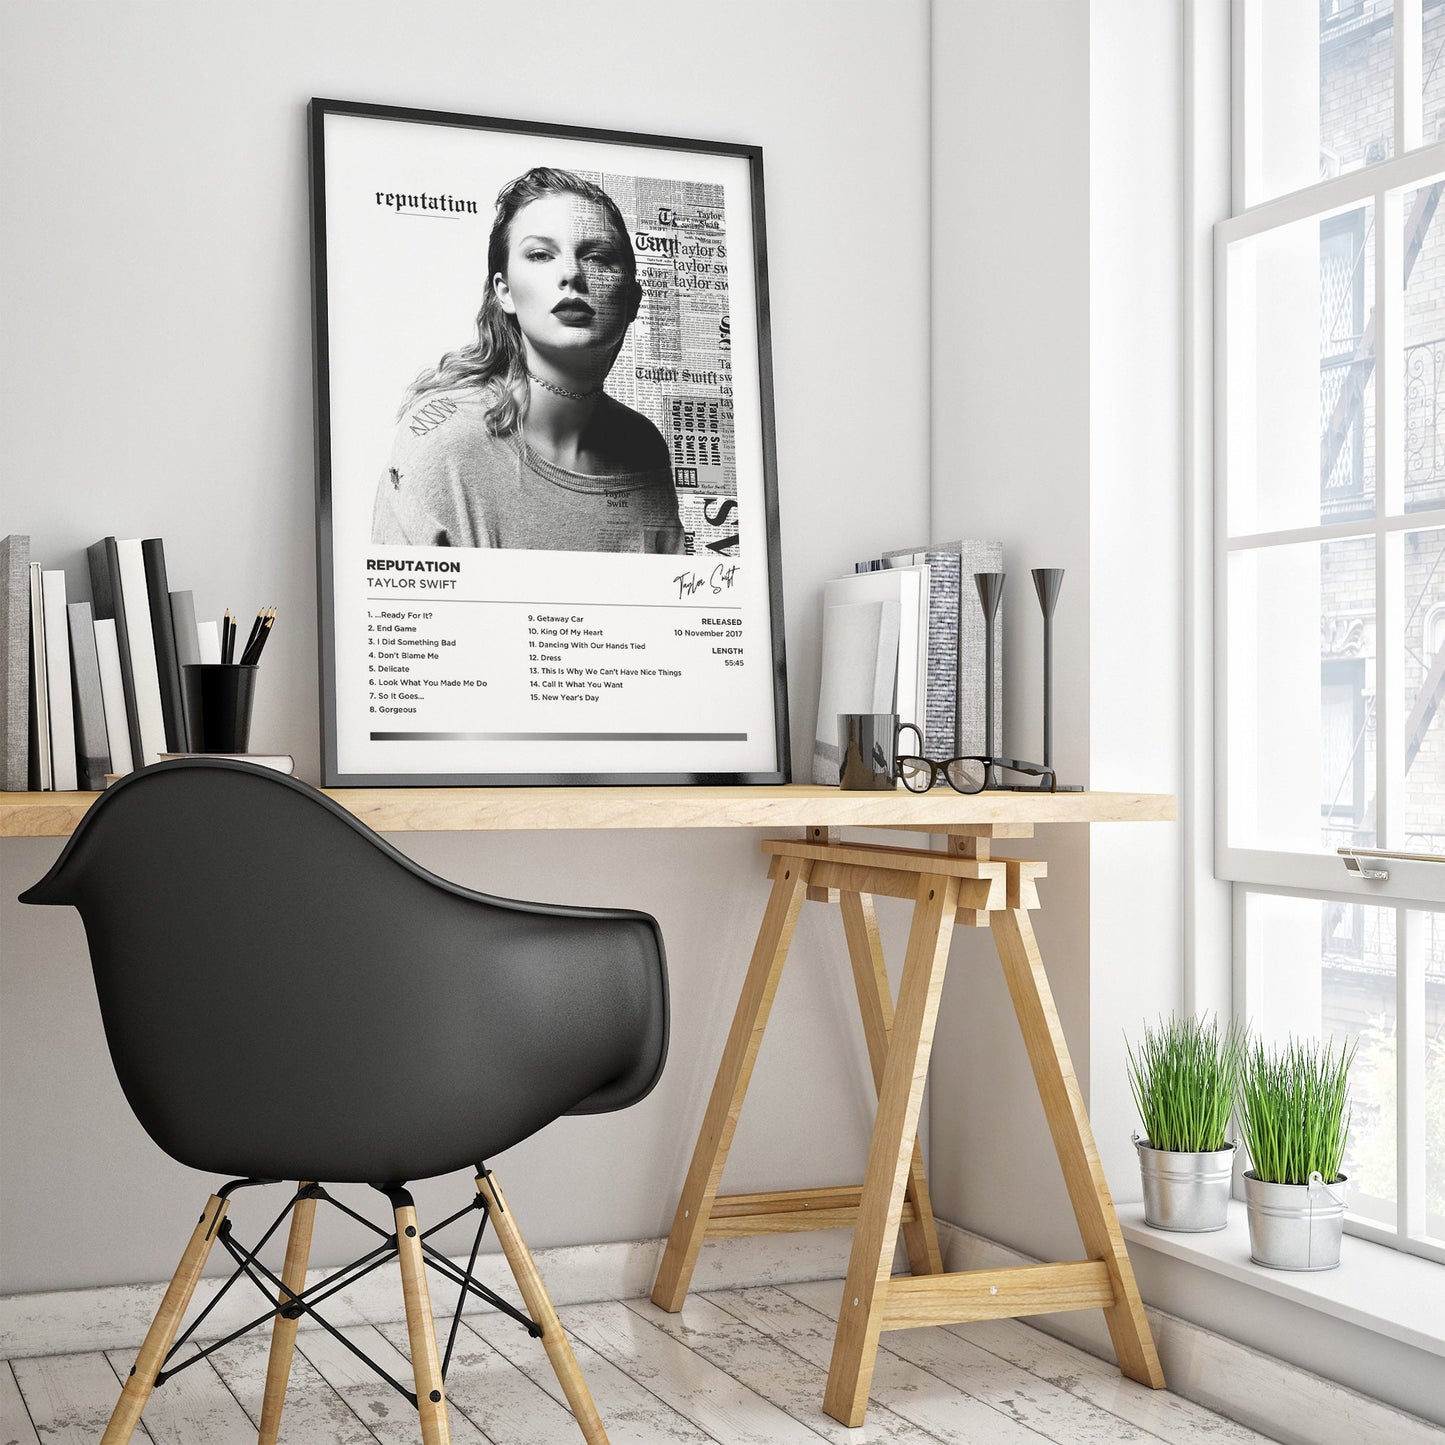 Taylor Swift - Reputation Framed Poster Print | Polaroid Style | Album Cover Artwork